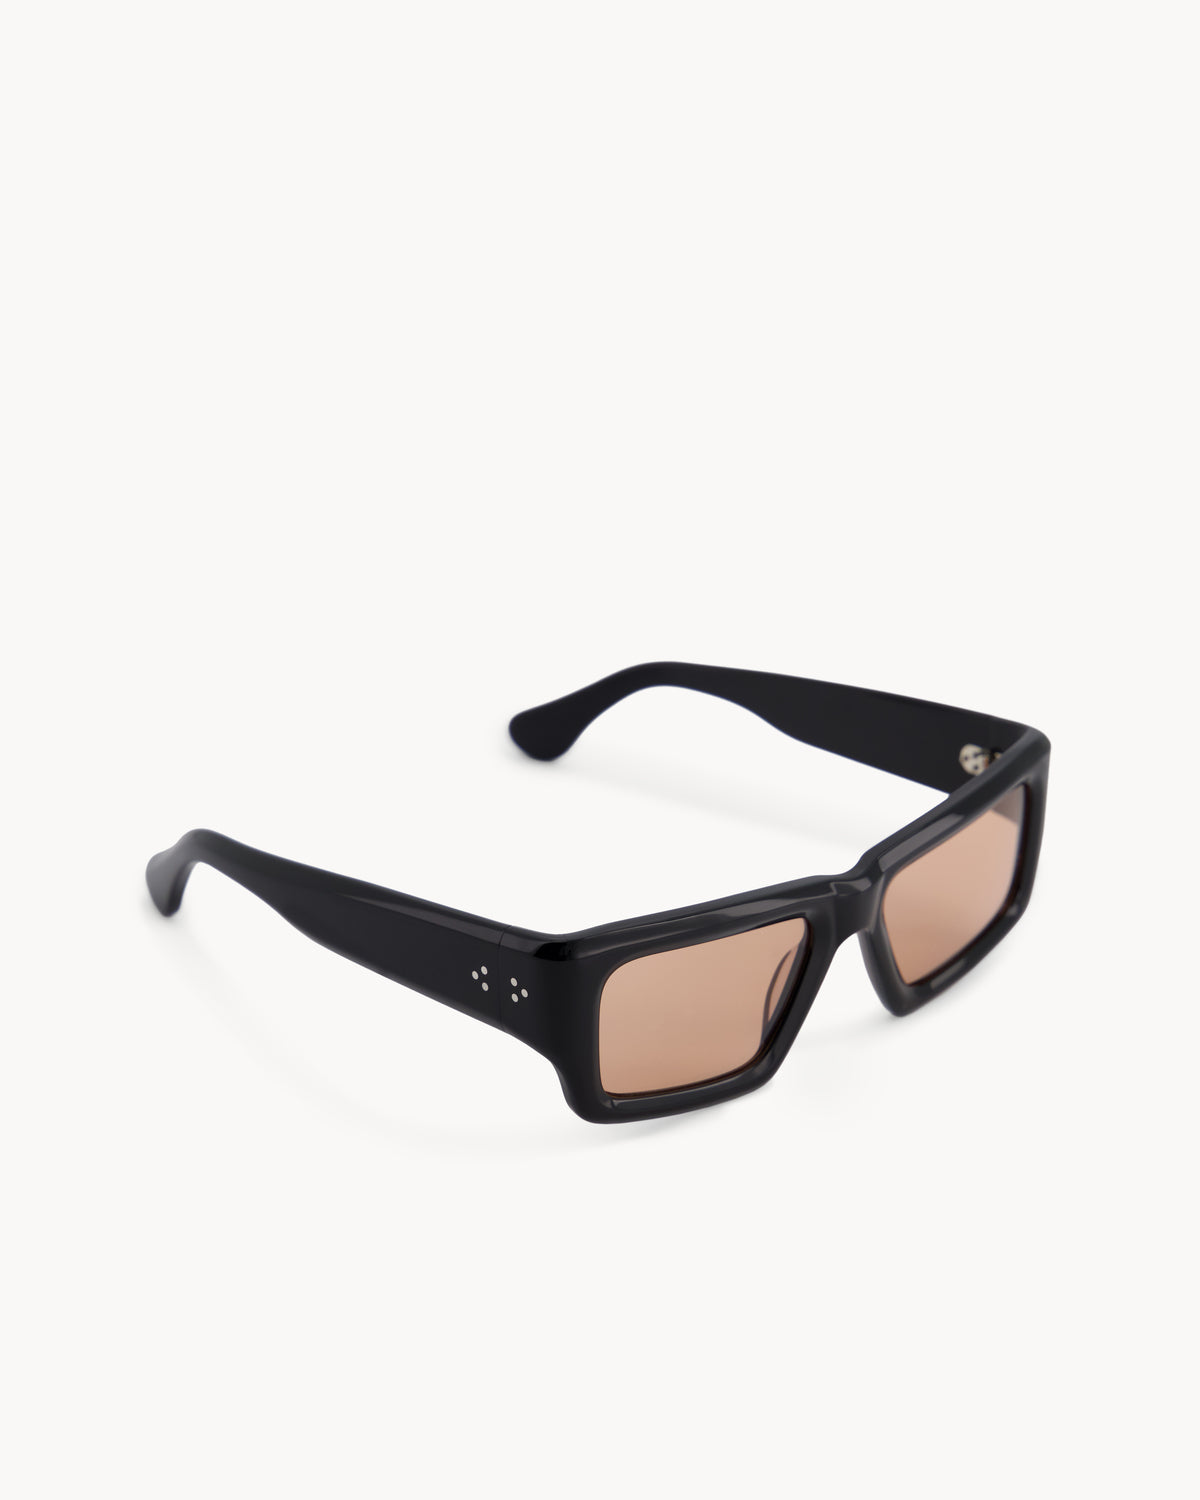 Port Tanger Sabea Sunglasses in Black Acetate and Amber Lenses 2